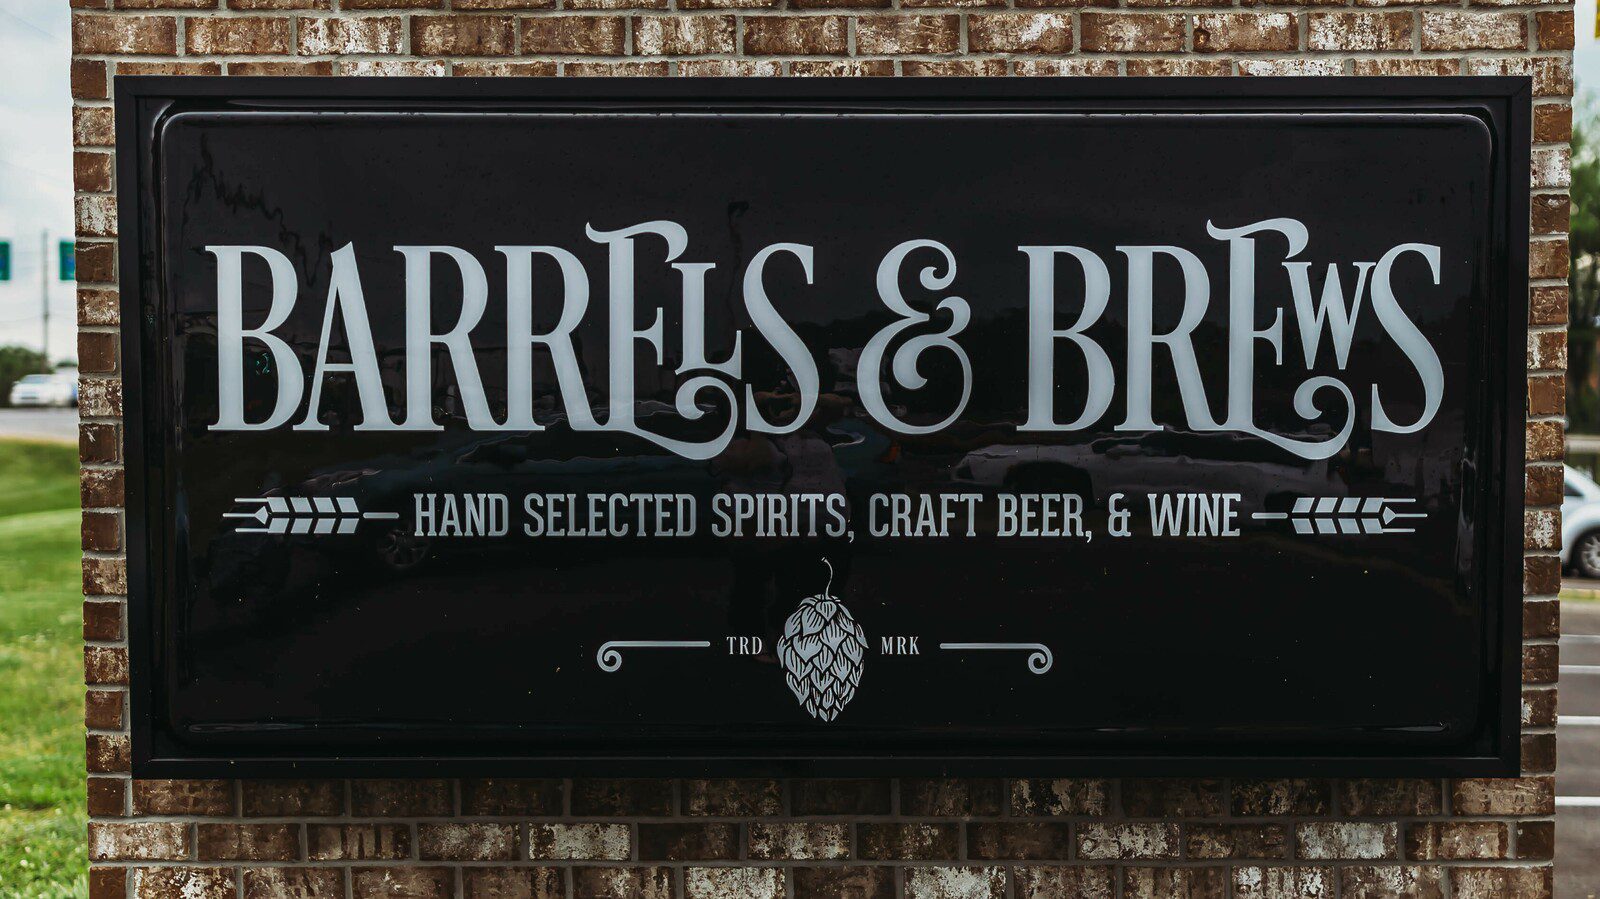 Barrels and Brews Franklin, TN Sign - Spirits, Beer, and Wine Retailer.